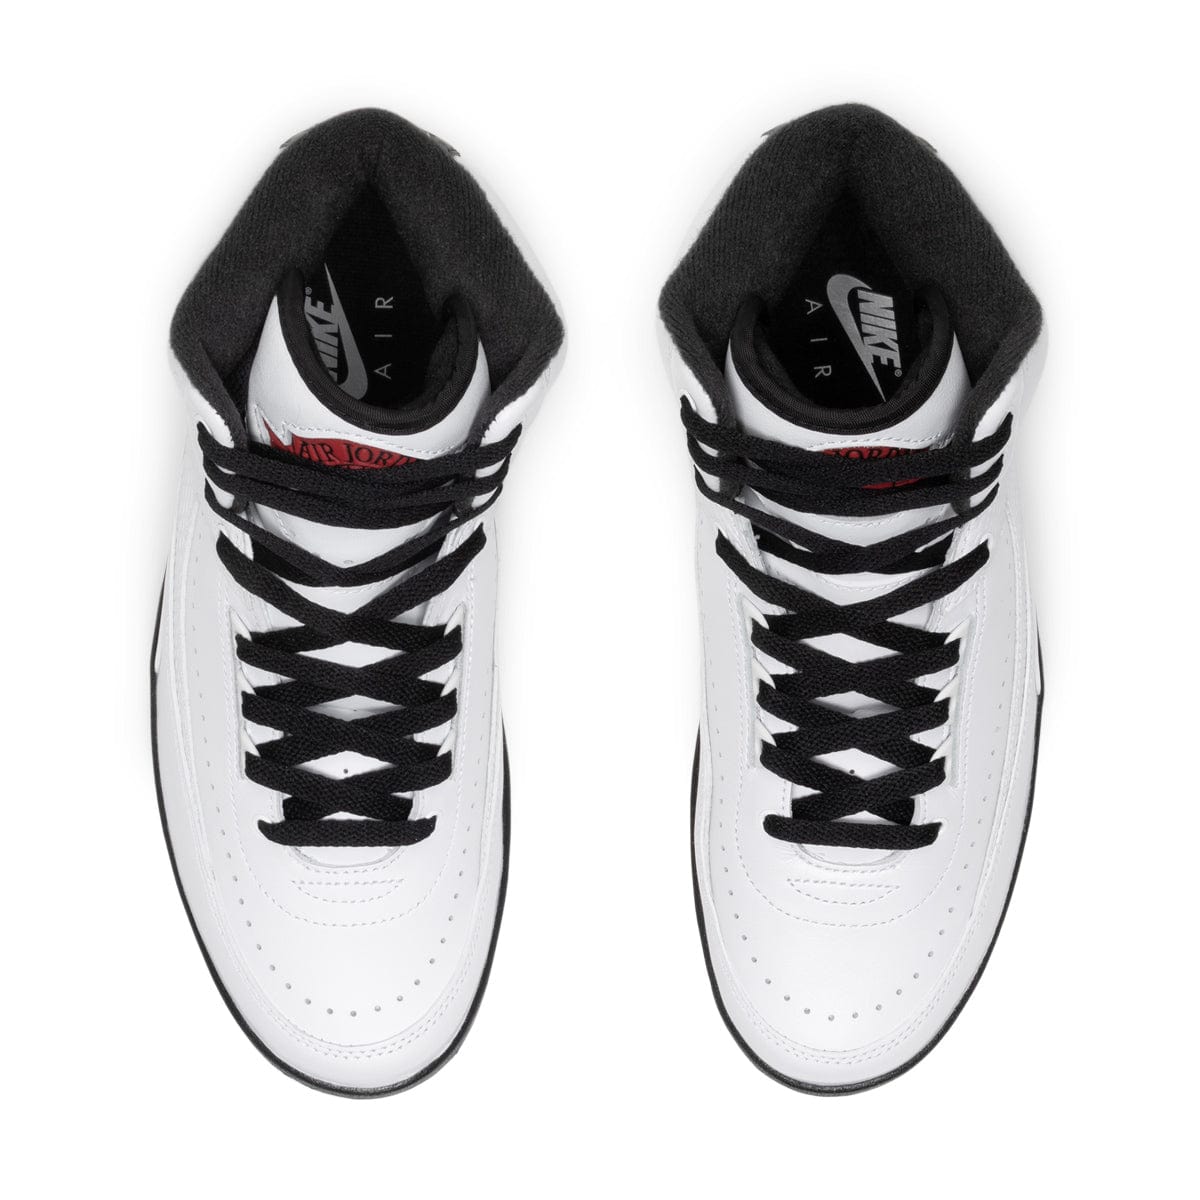 Air Jordan Sneakers AIR JORDAN 2 RETRO